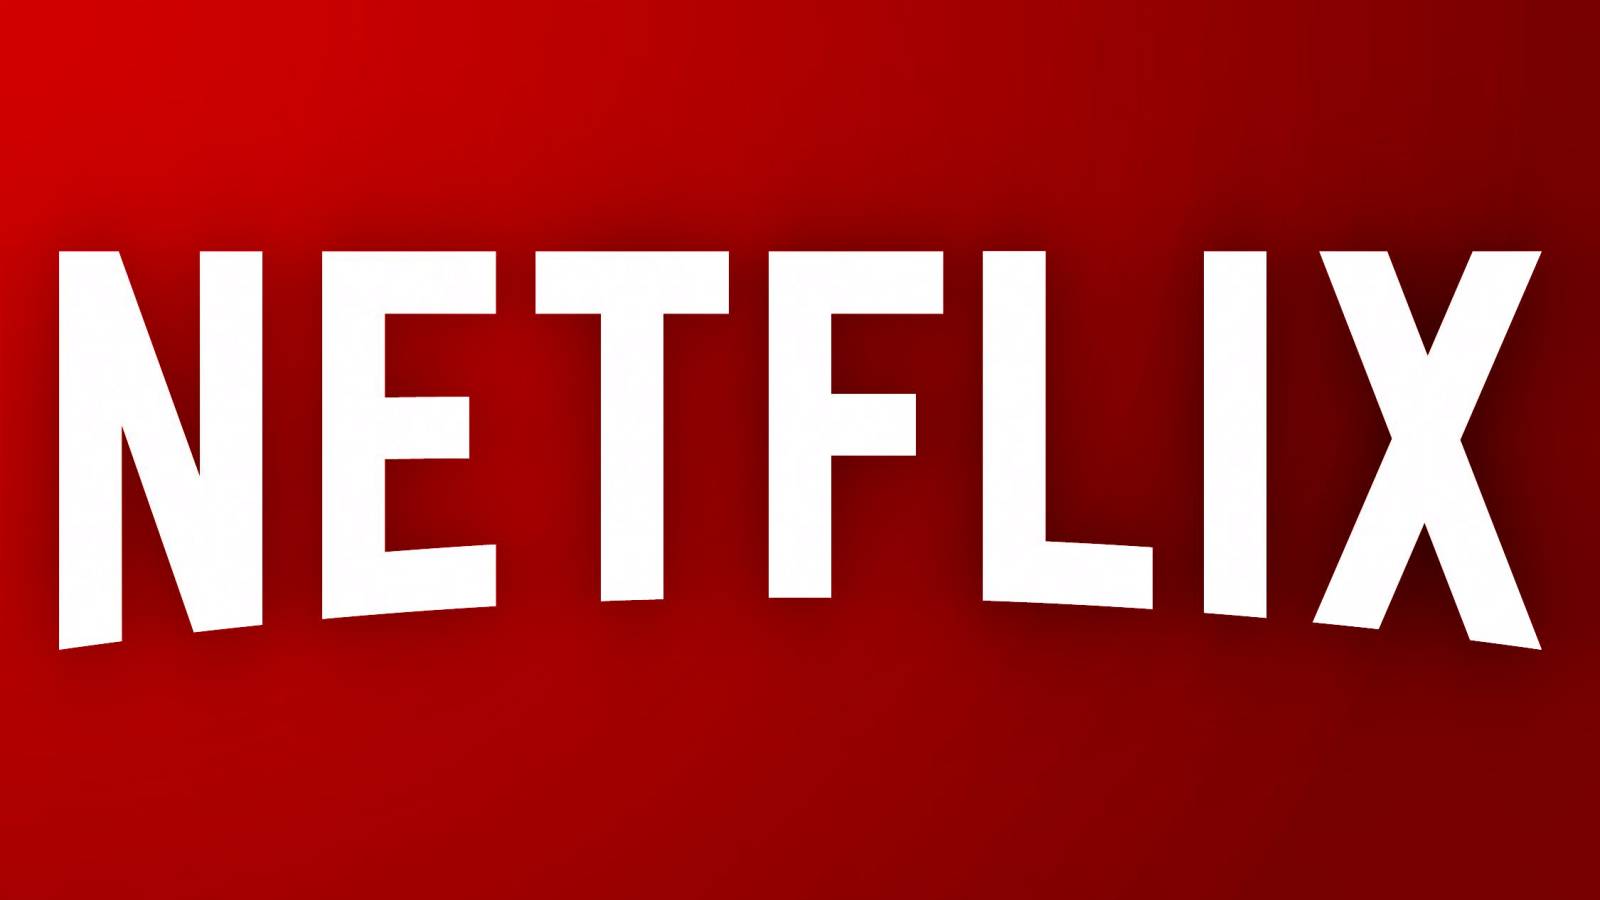 Netflix Amazon CRITICATE Dur Starul Adam Driver Premiera Ferrari